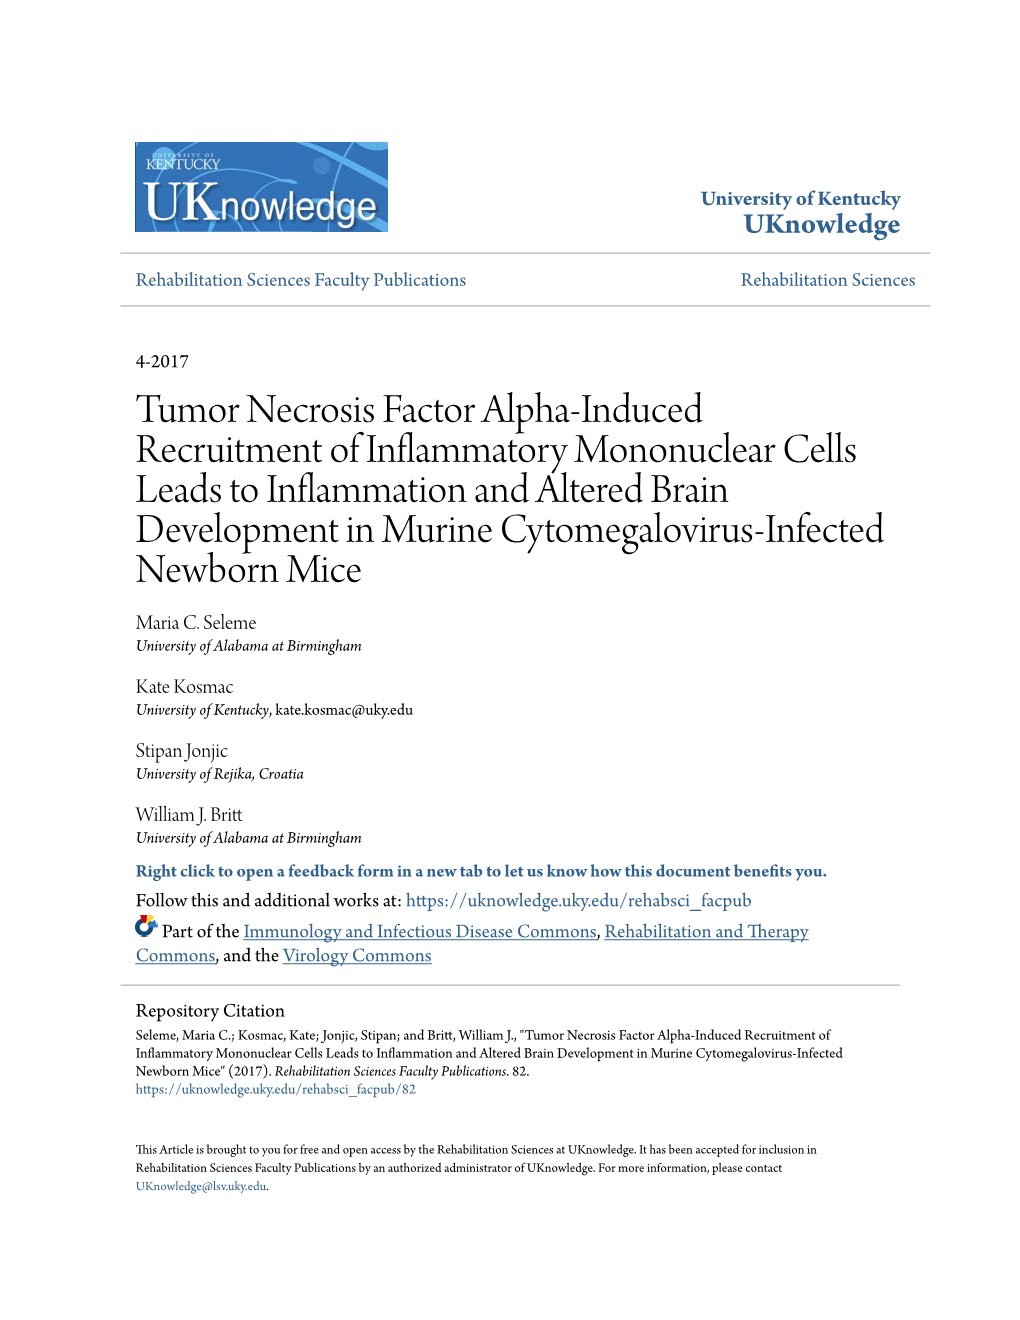 Tumor Necrosis Factor Alpha-Induced Recruitment of Inflammatory